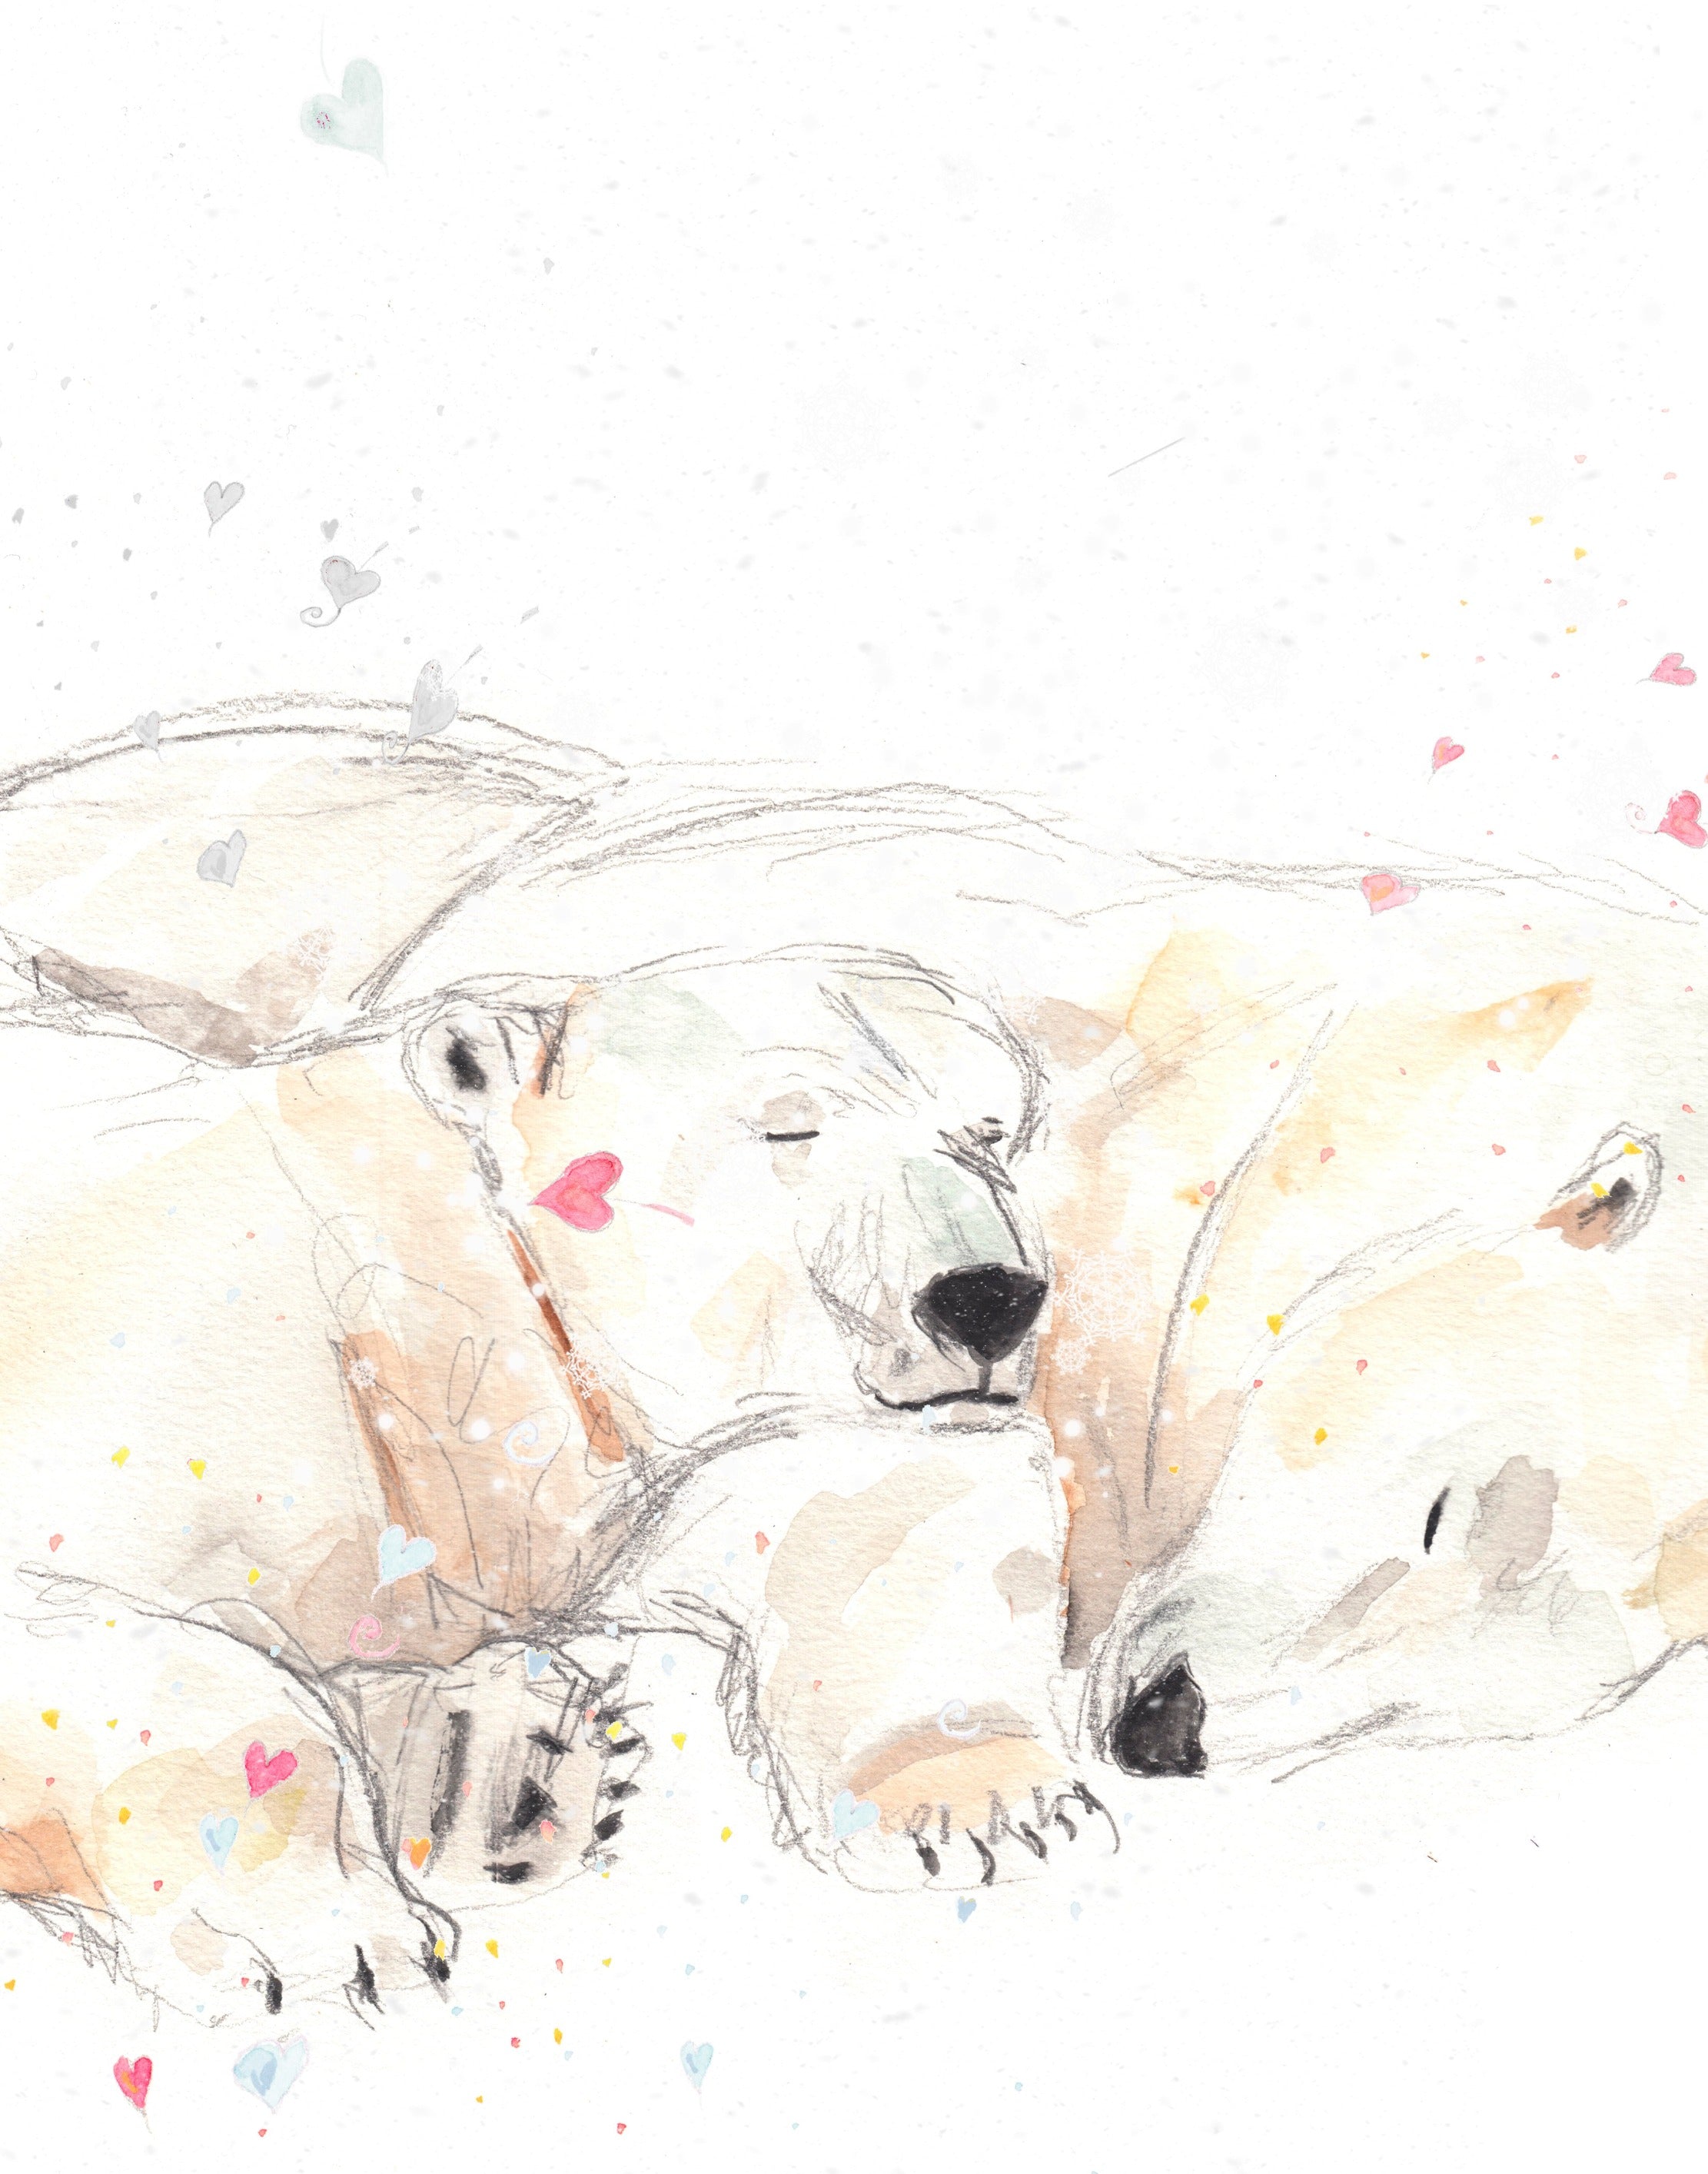 Polar bears winter nap SNOW AND HEARTS, polar bear painting, watercolor and drawing